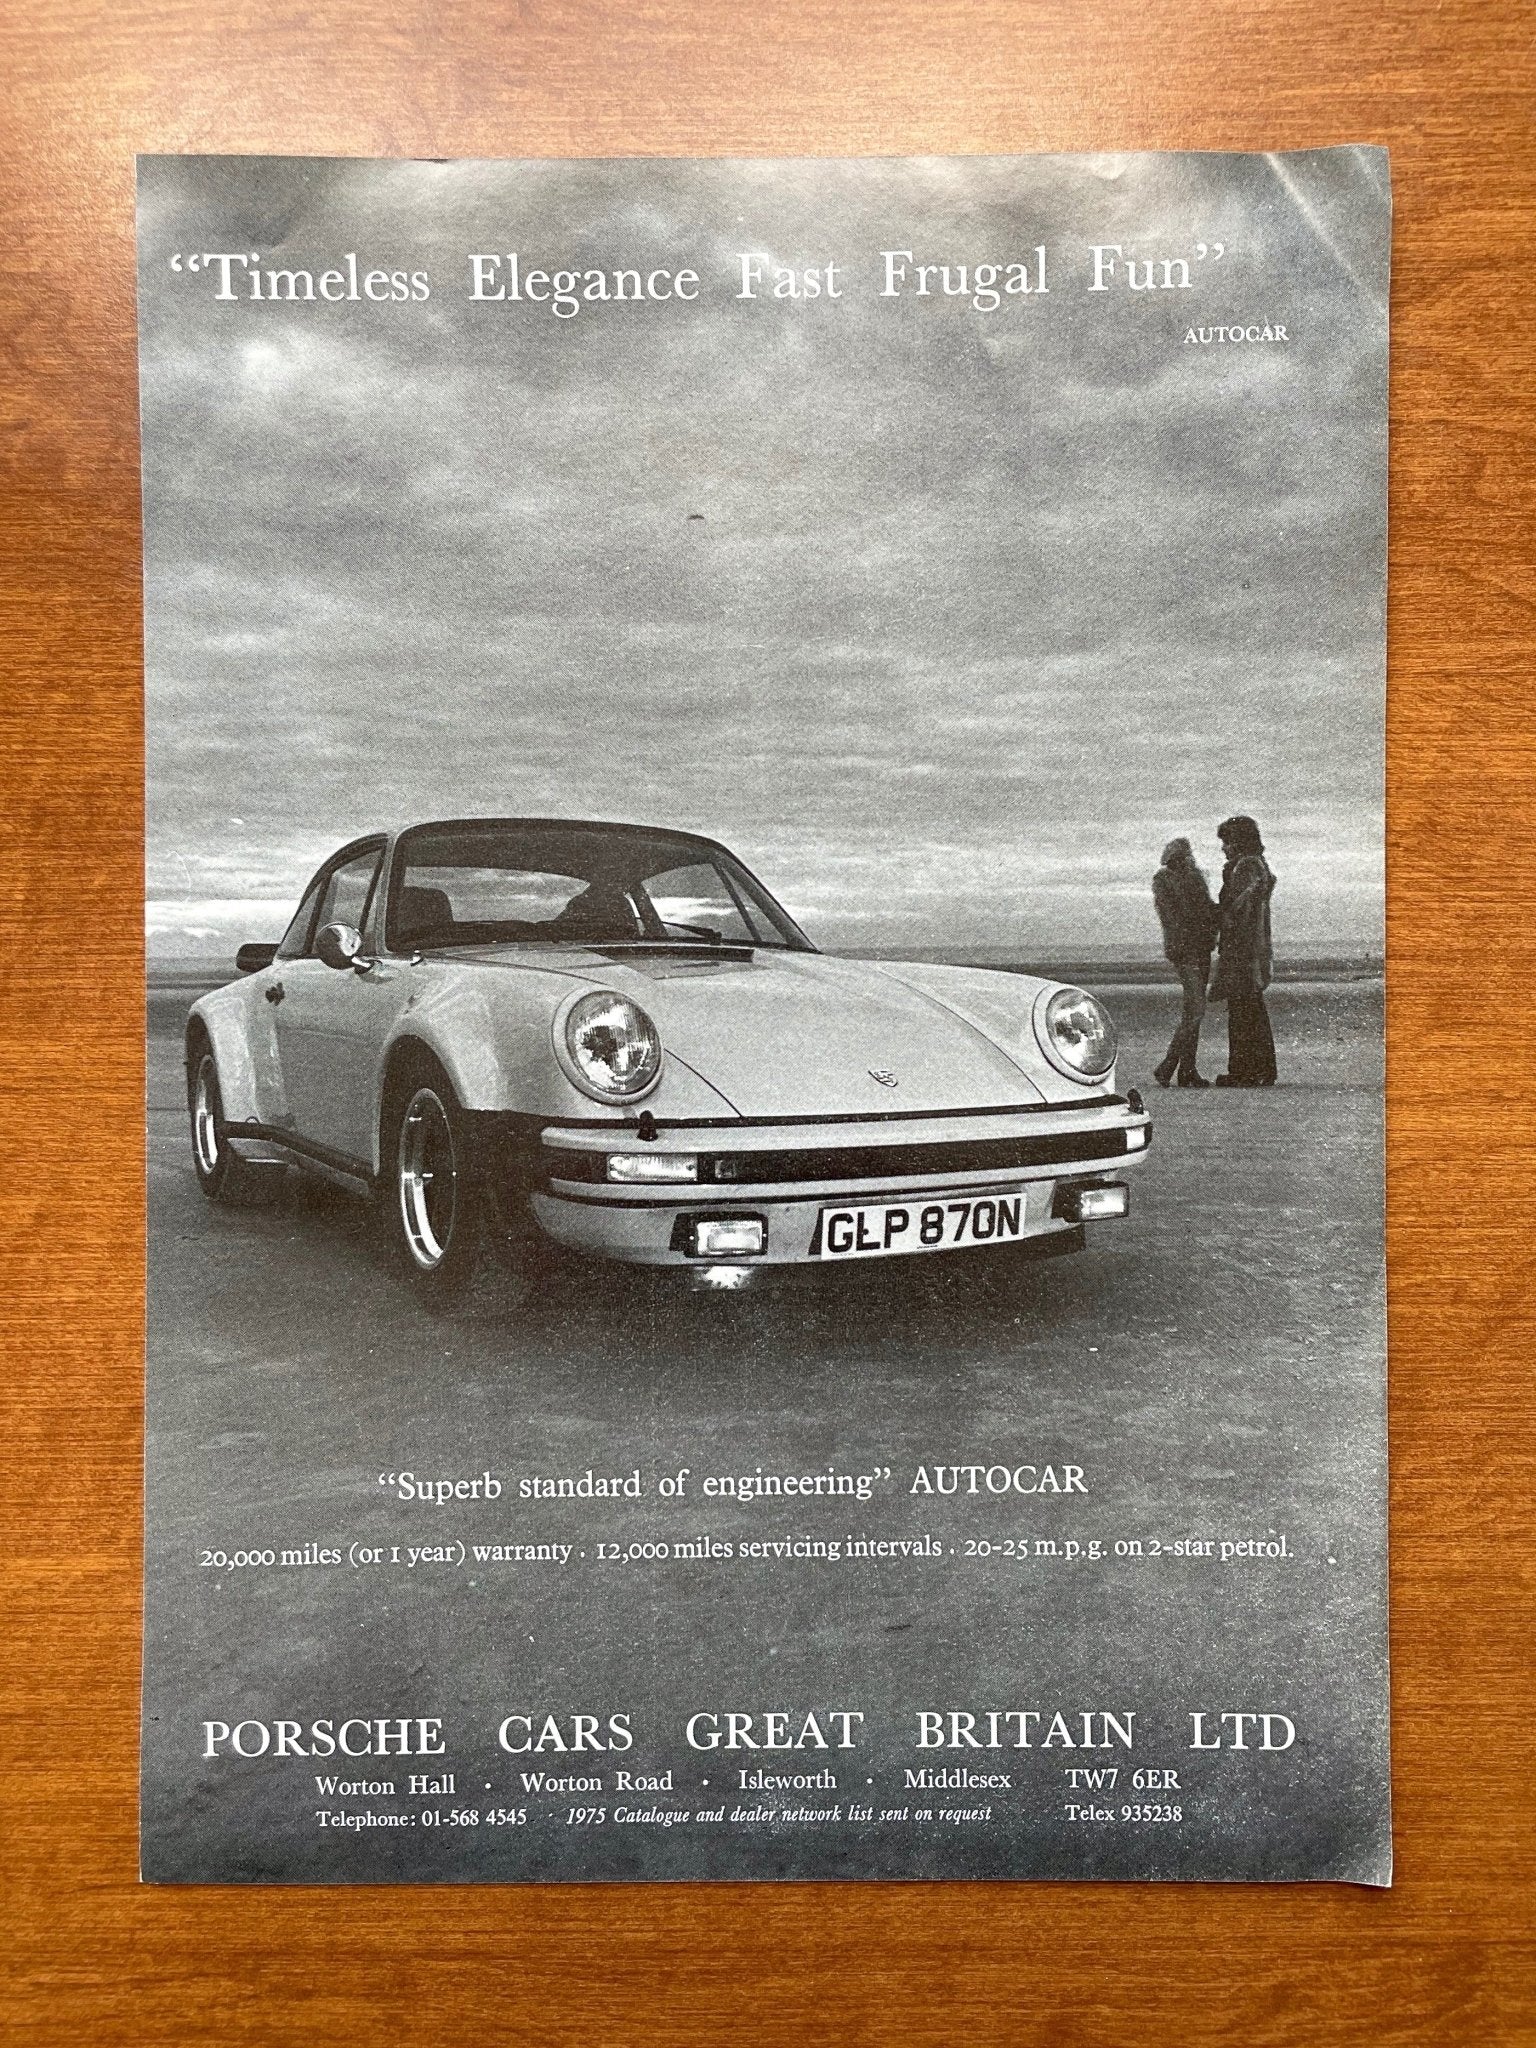 1975 Porsche 911 "Timeless Elegance Fast Frugal Fun" Advertisement